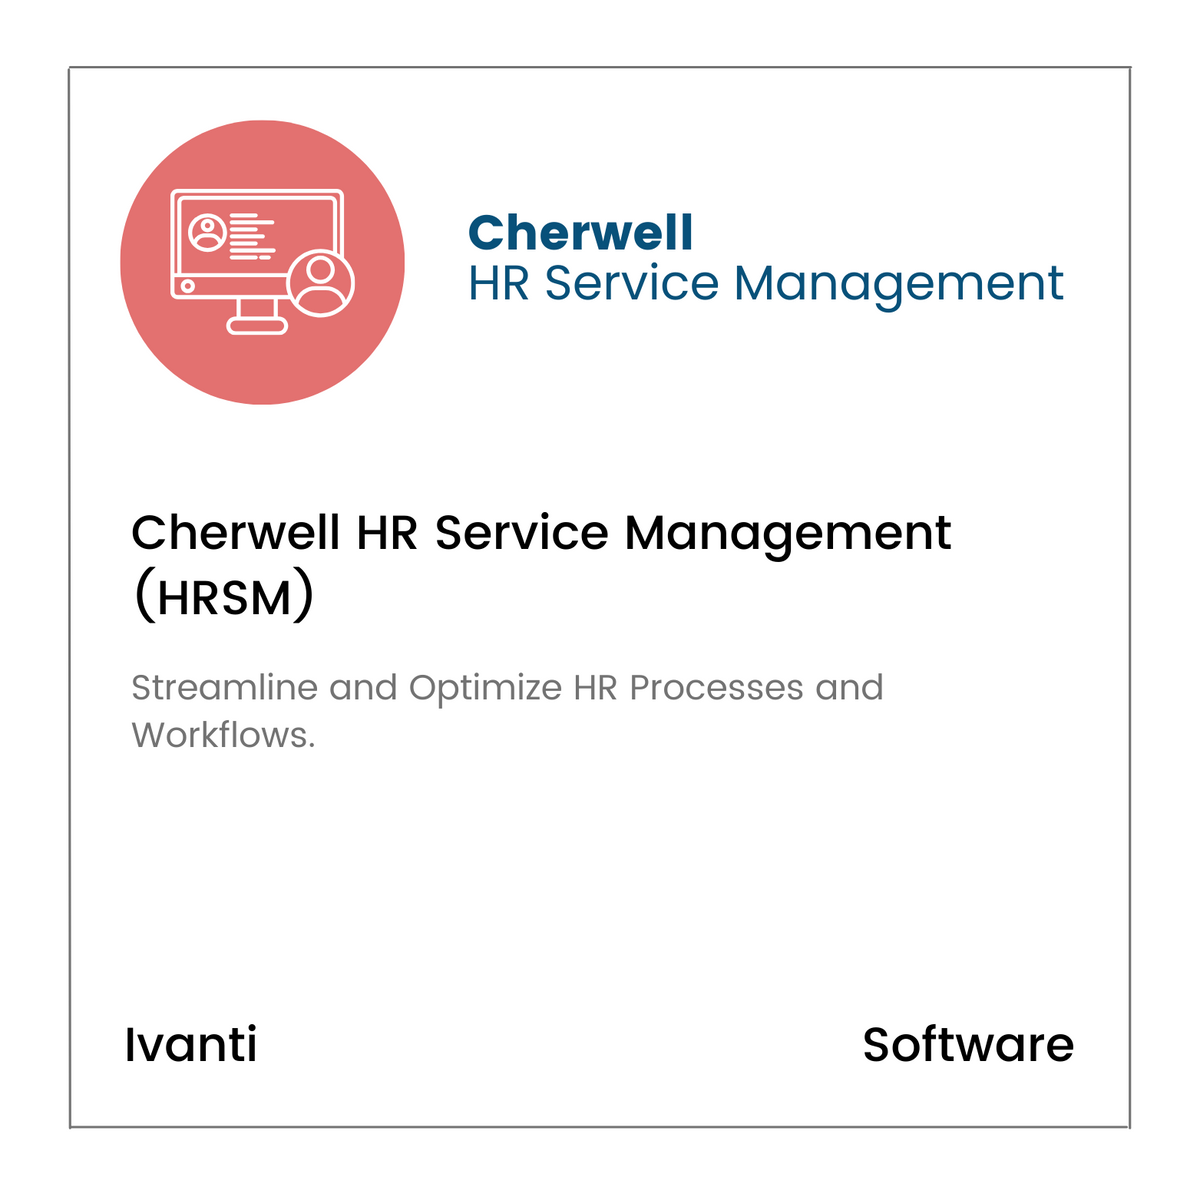 Cherwell Human Resources Service Management (HRSM)